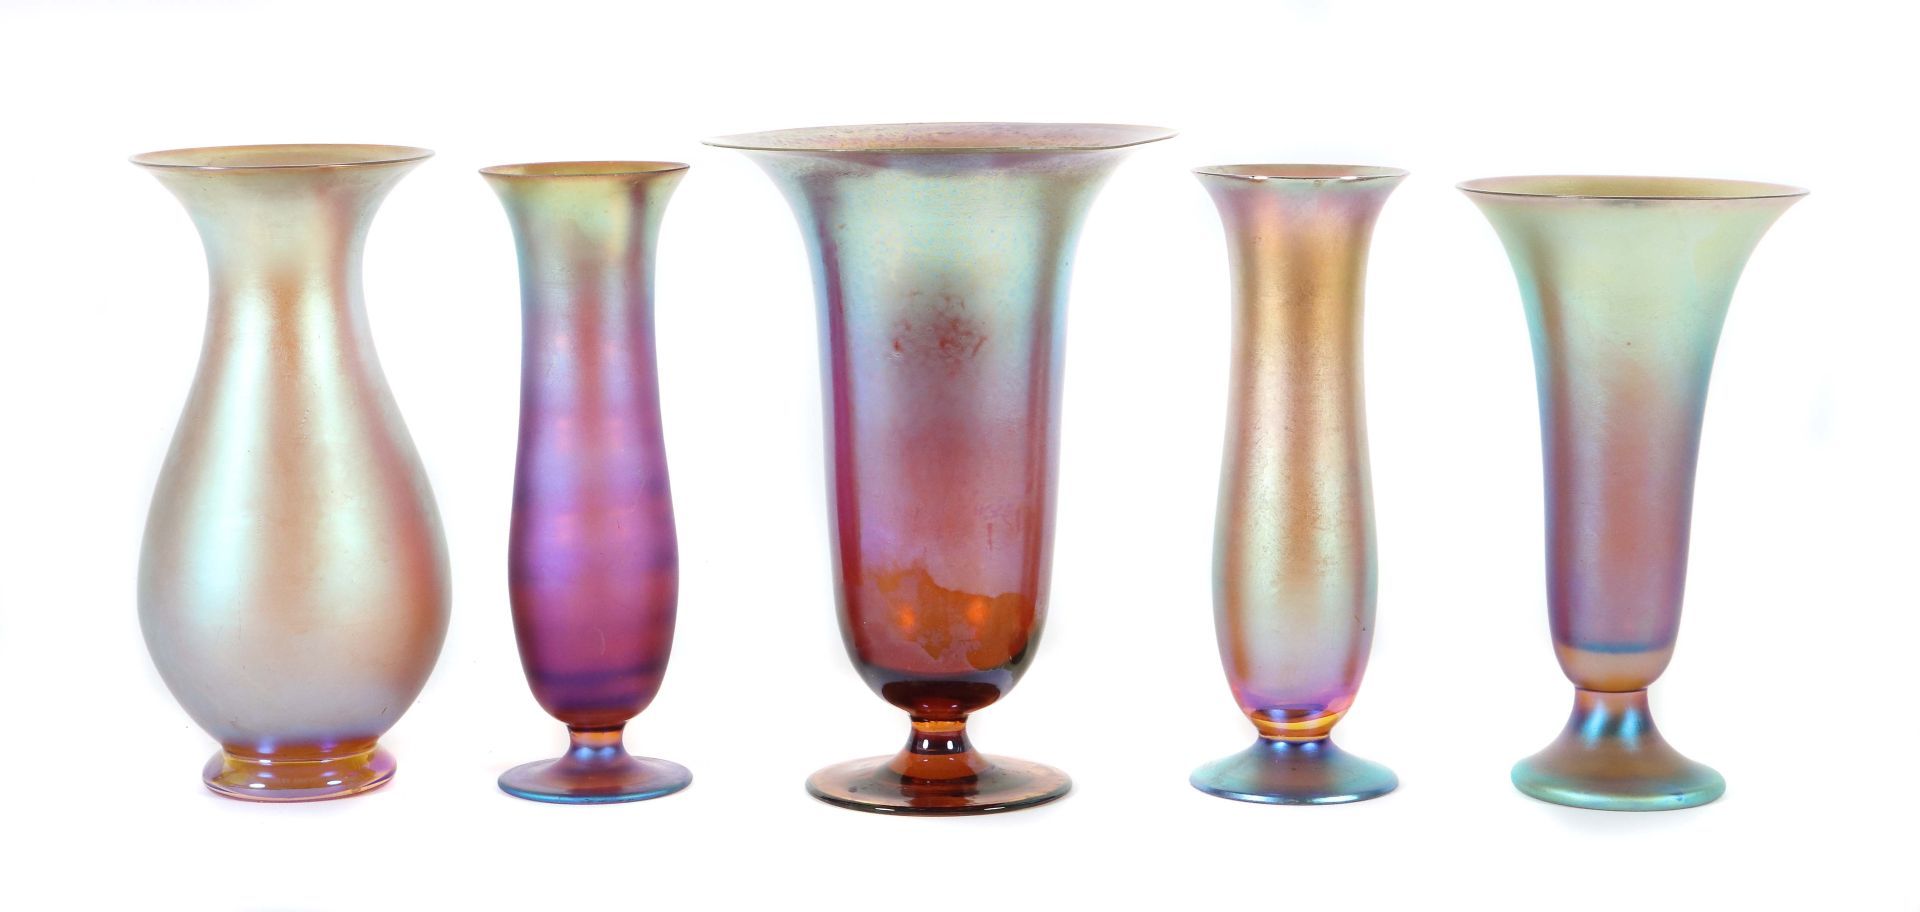 5 variierende "Myra"-Vasen WMF,